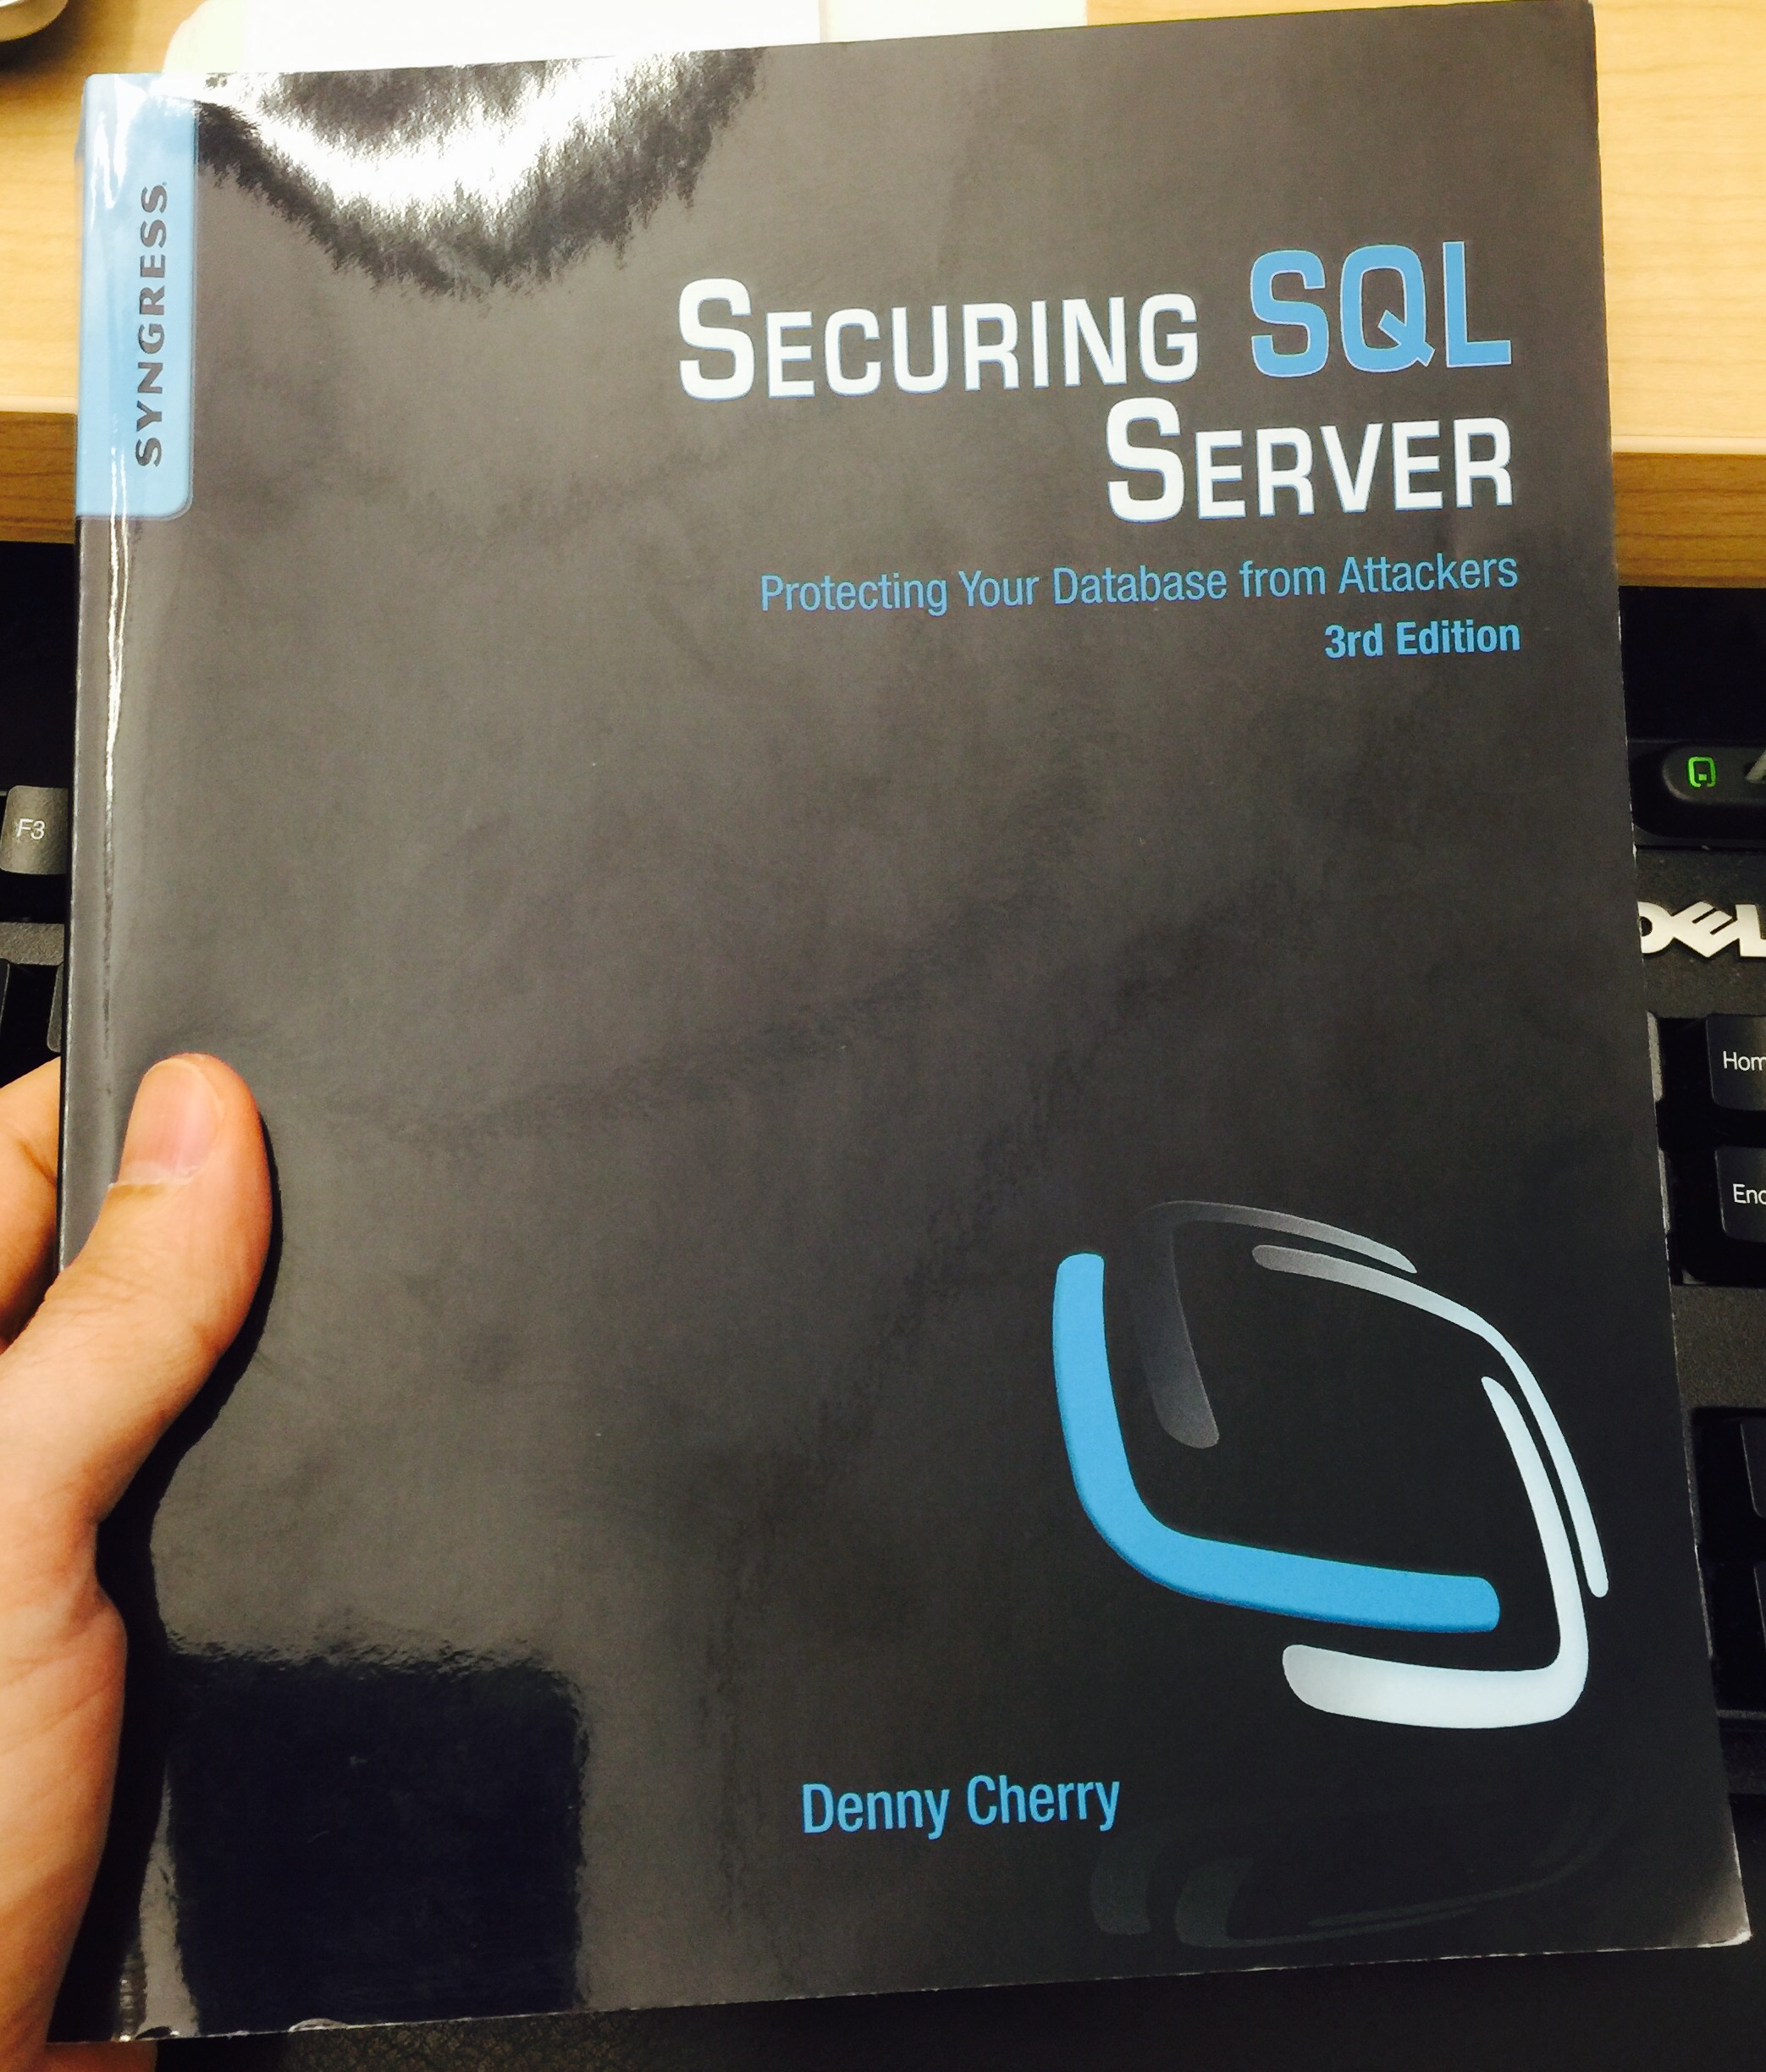 Securing SQL Server by Denny Cherry